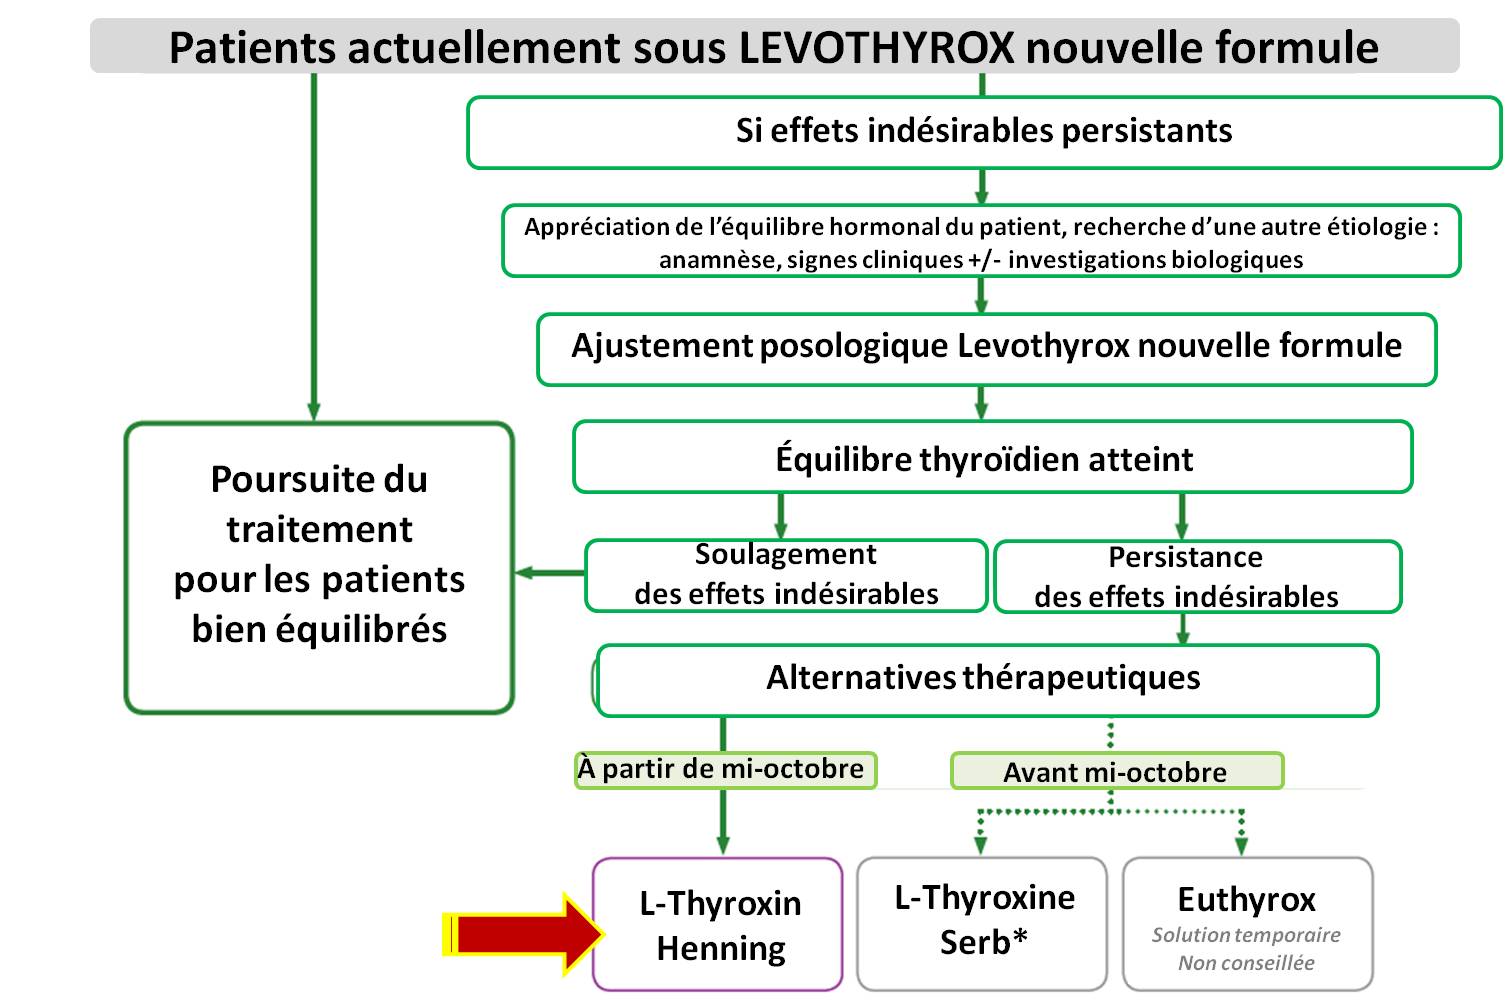 LTHYROXIN HENNING (lévothyroxine) : les présentation françaises ...